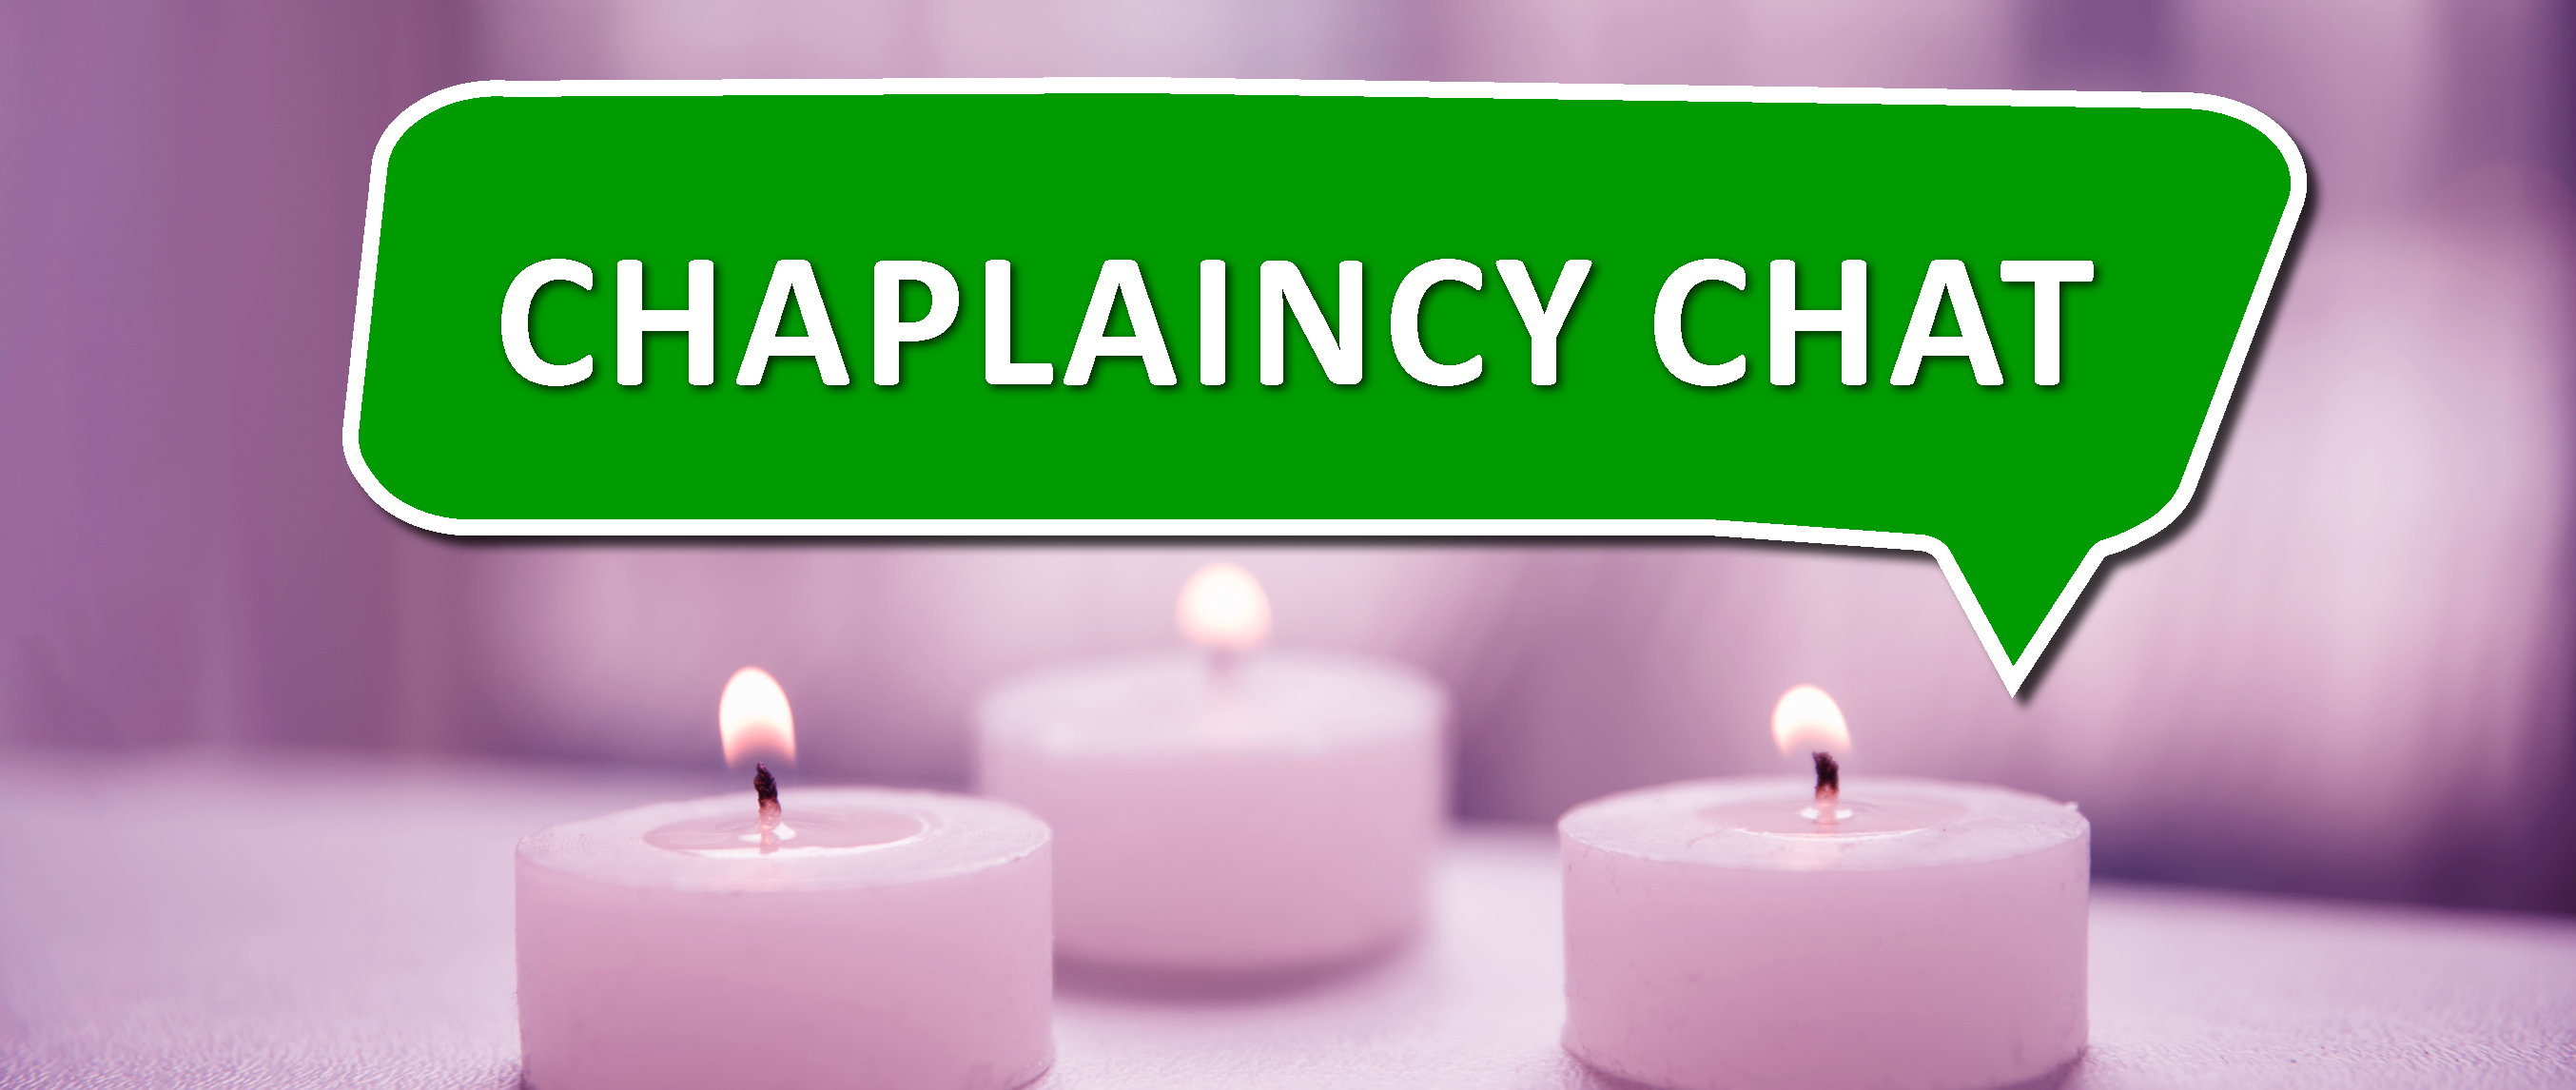 Chaplaincy chat Header